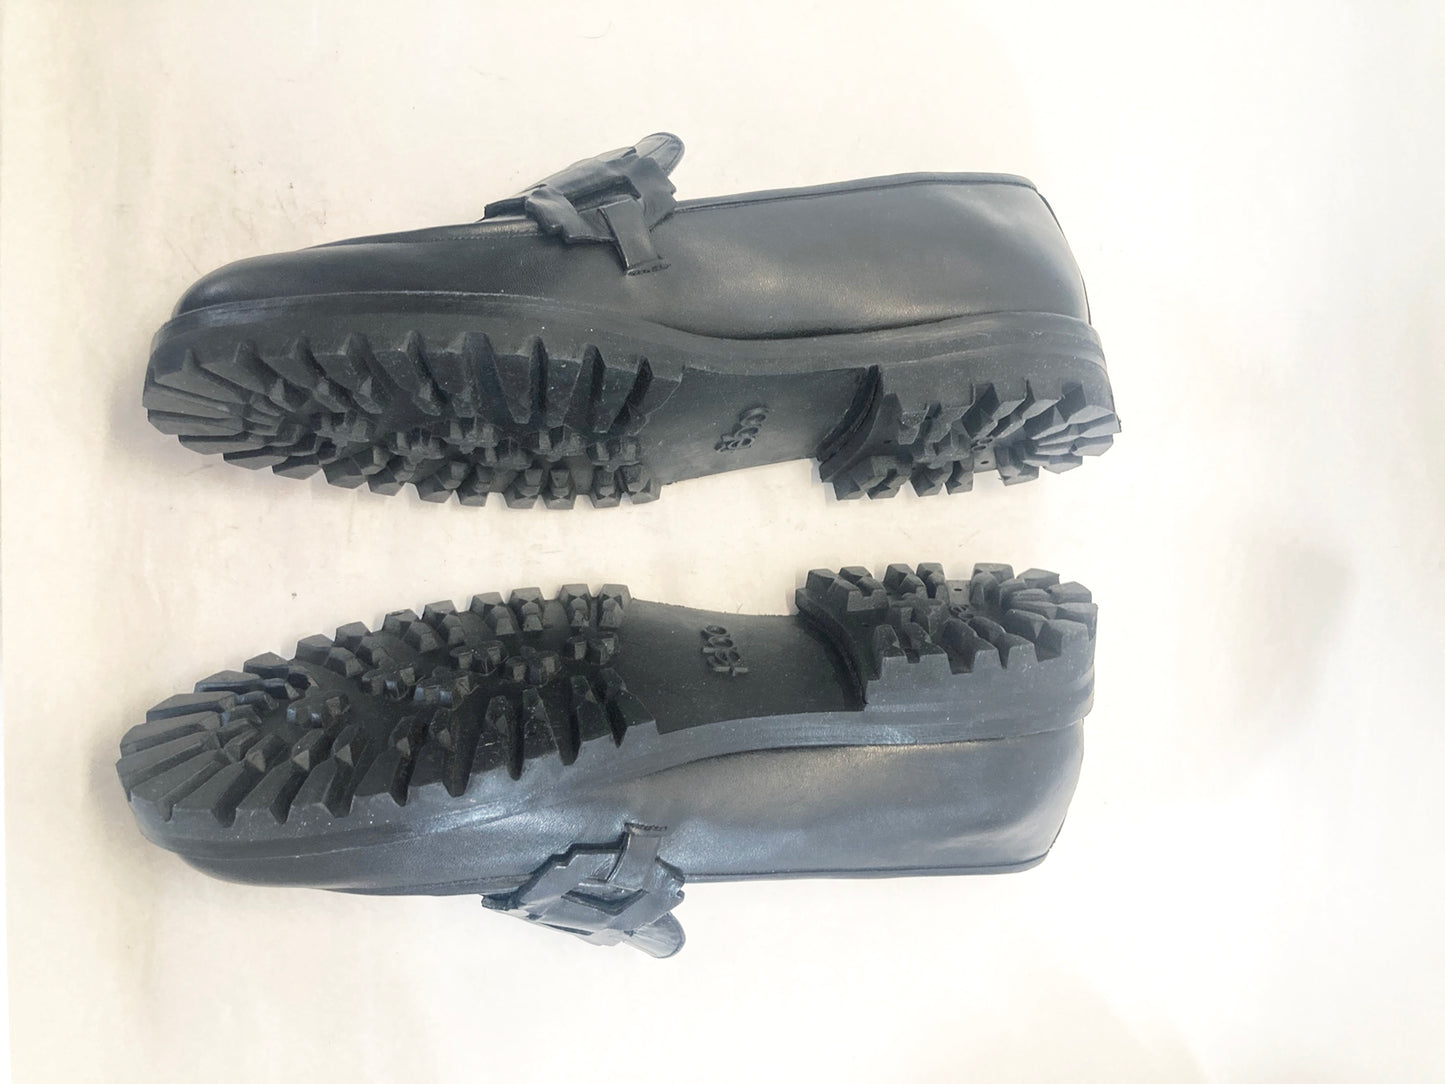 Trini Loafer in Black + Croco Size 41